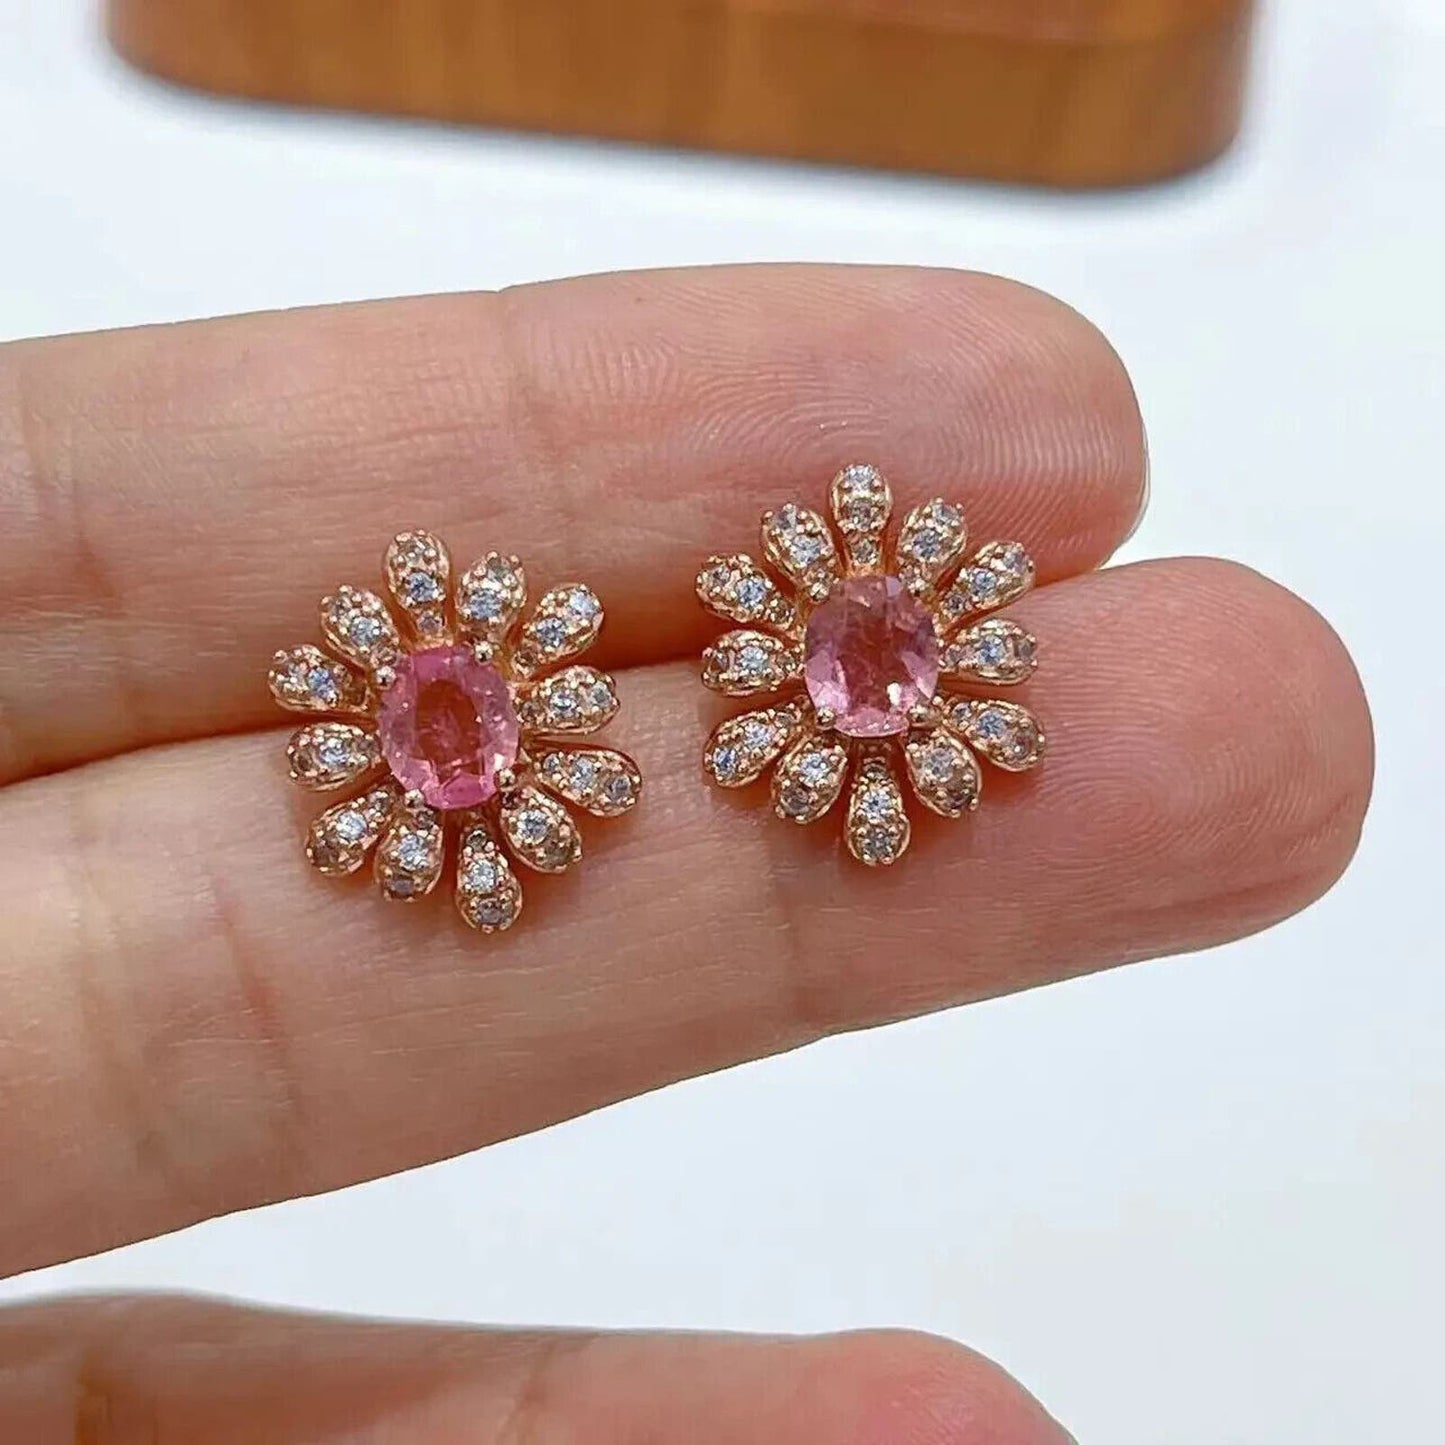 Natural Pink Tourmaline Stud Earrings, Rose Gold Pink Tourmaline Flower Earrings